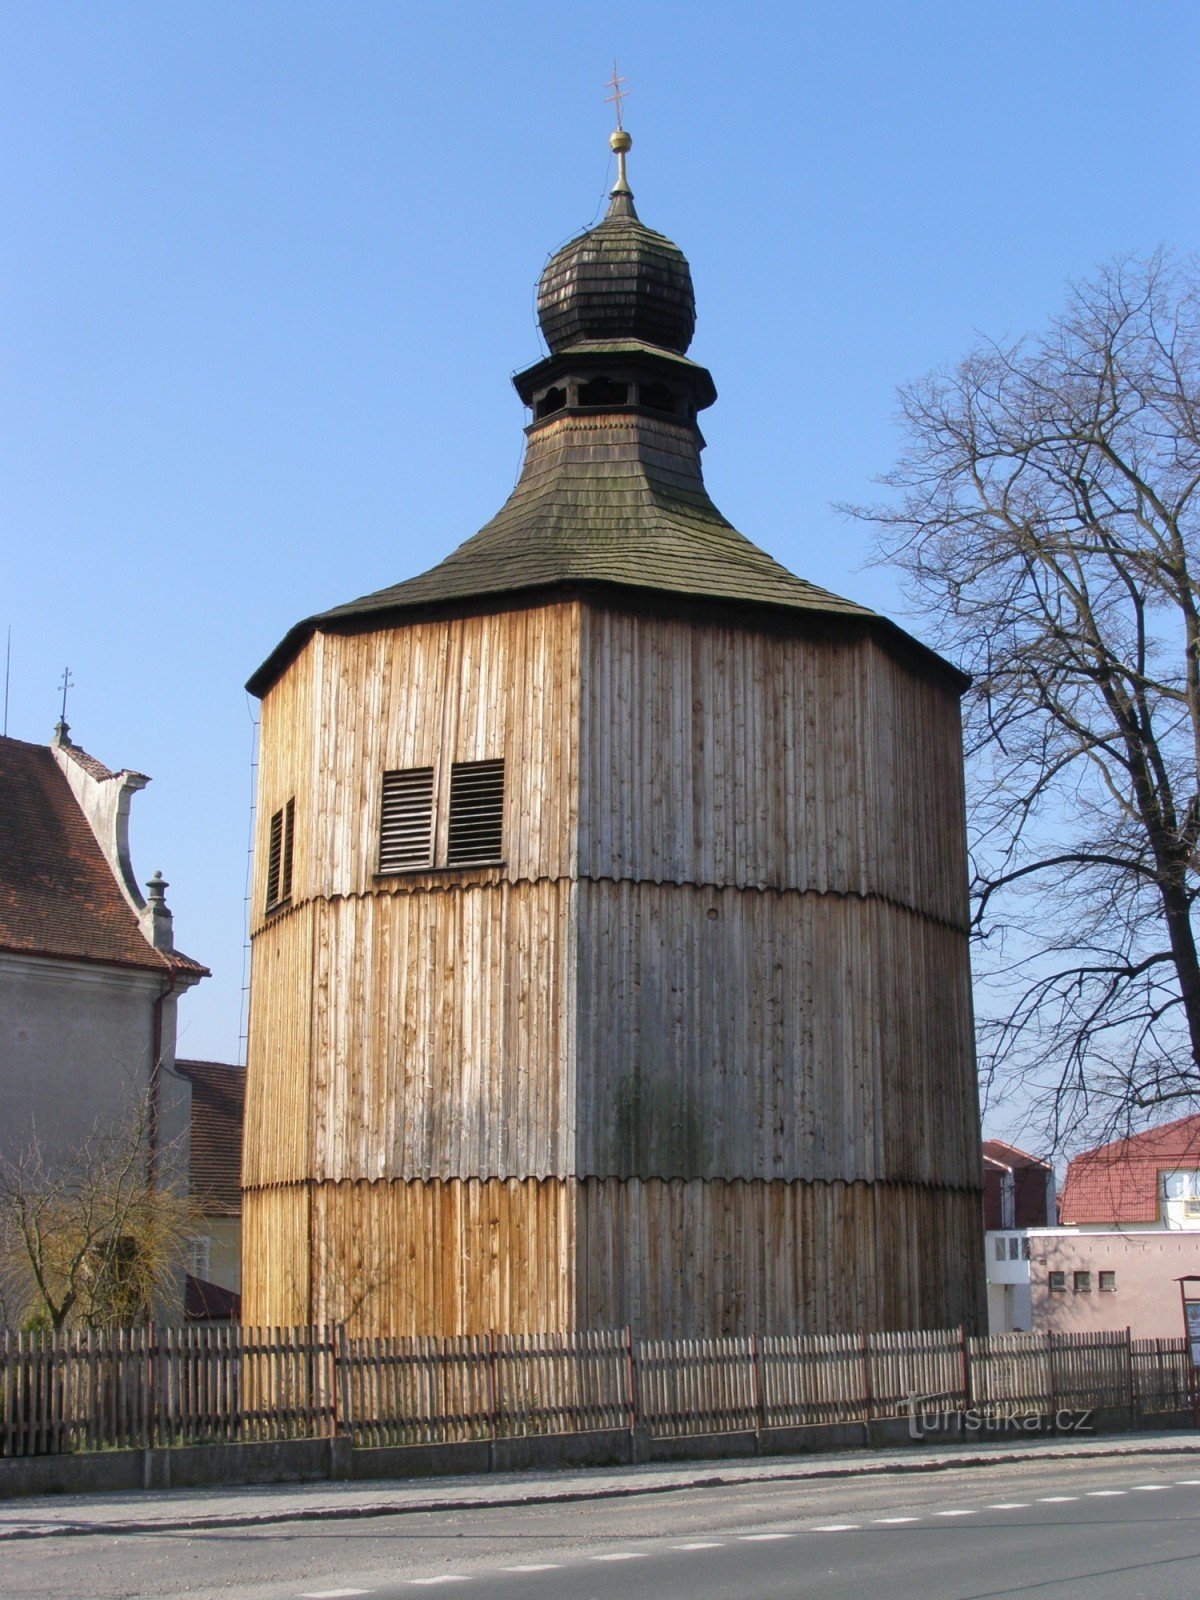 Sezemice - houten klokkentoren